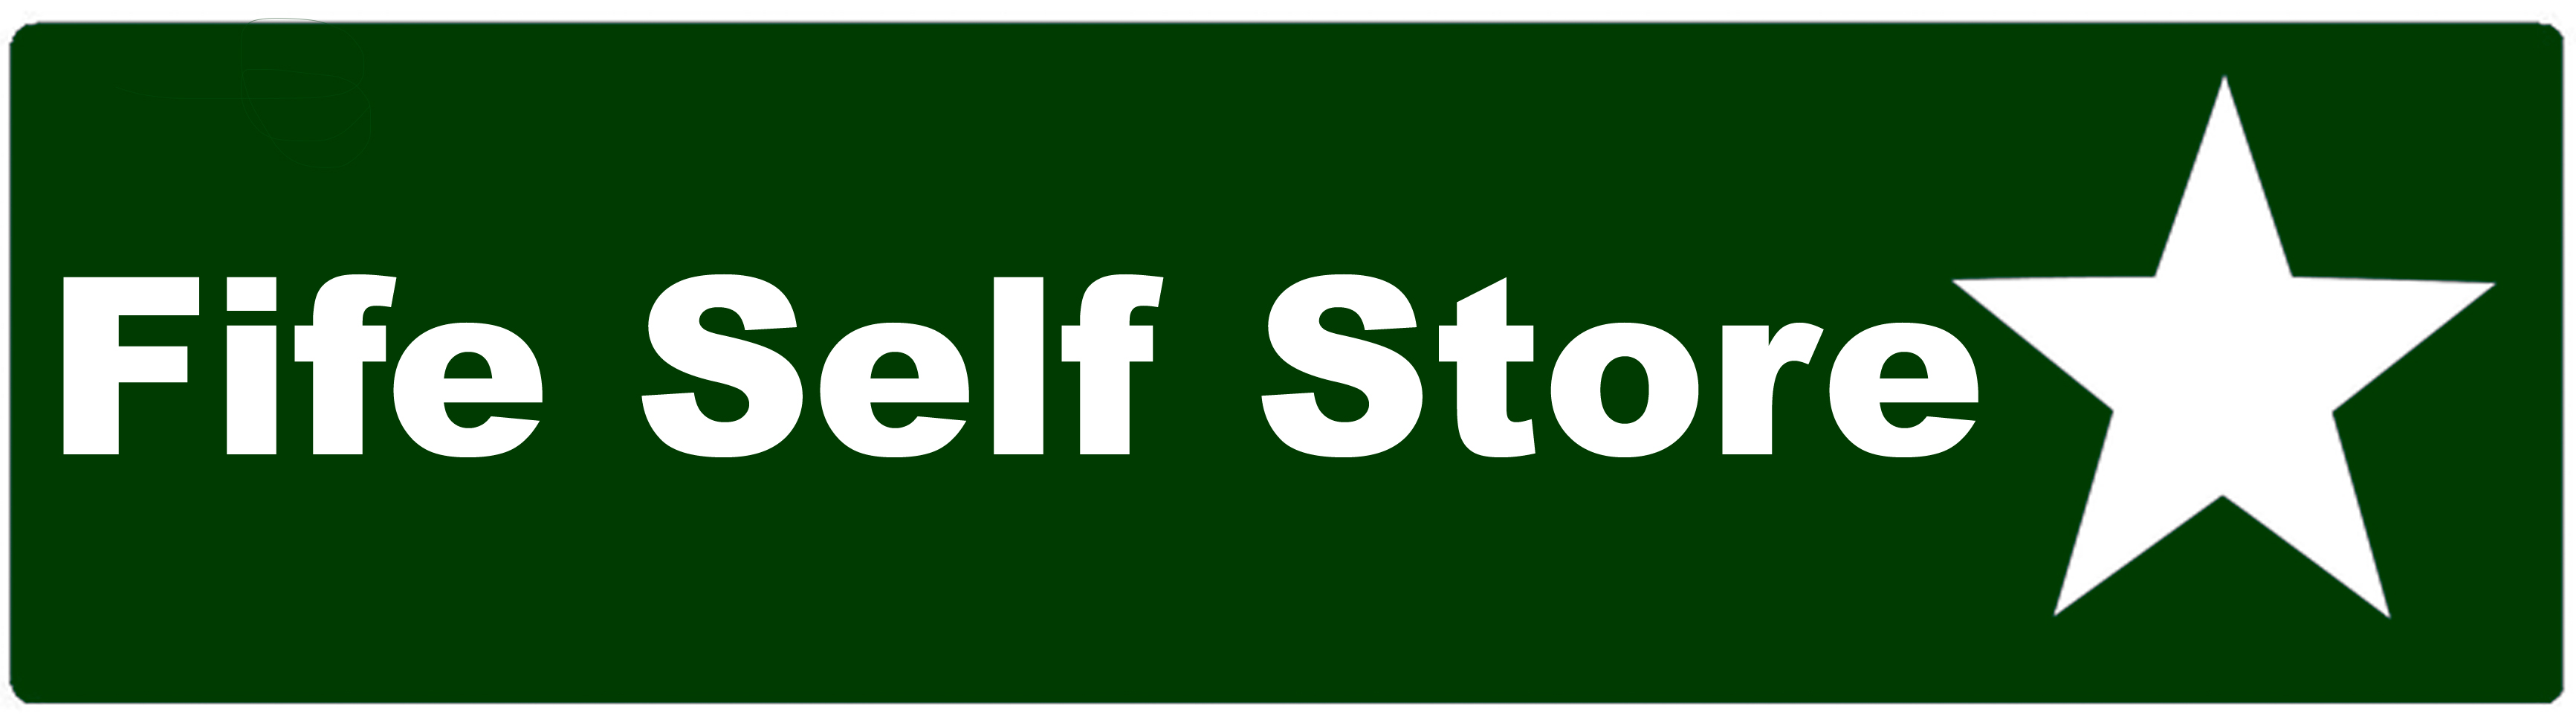 Fife Self Store